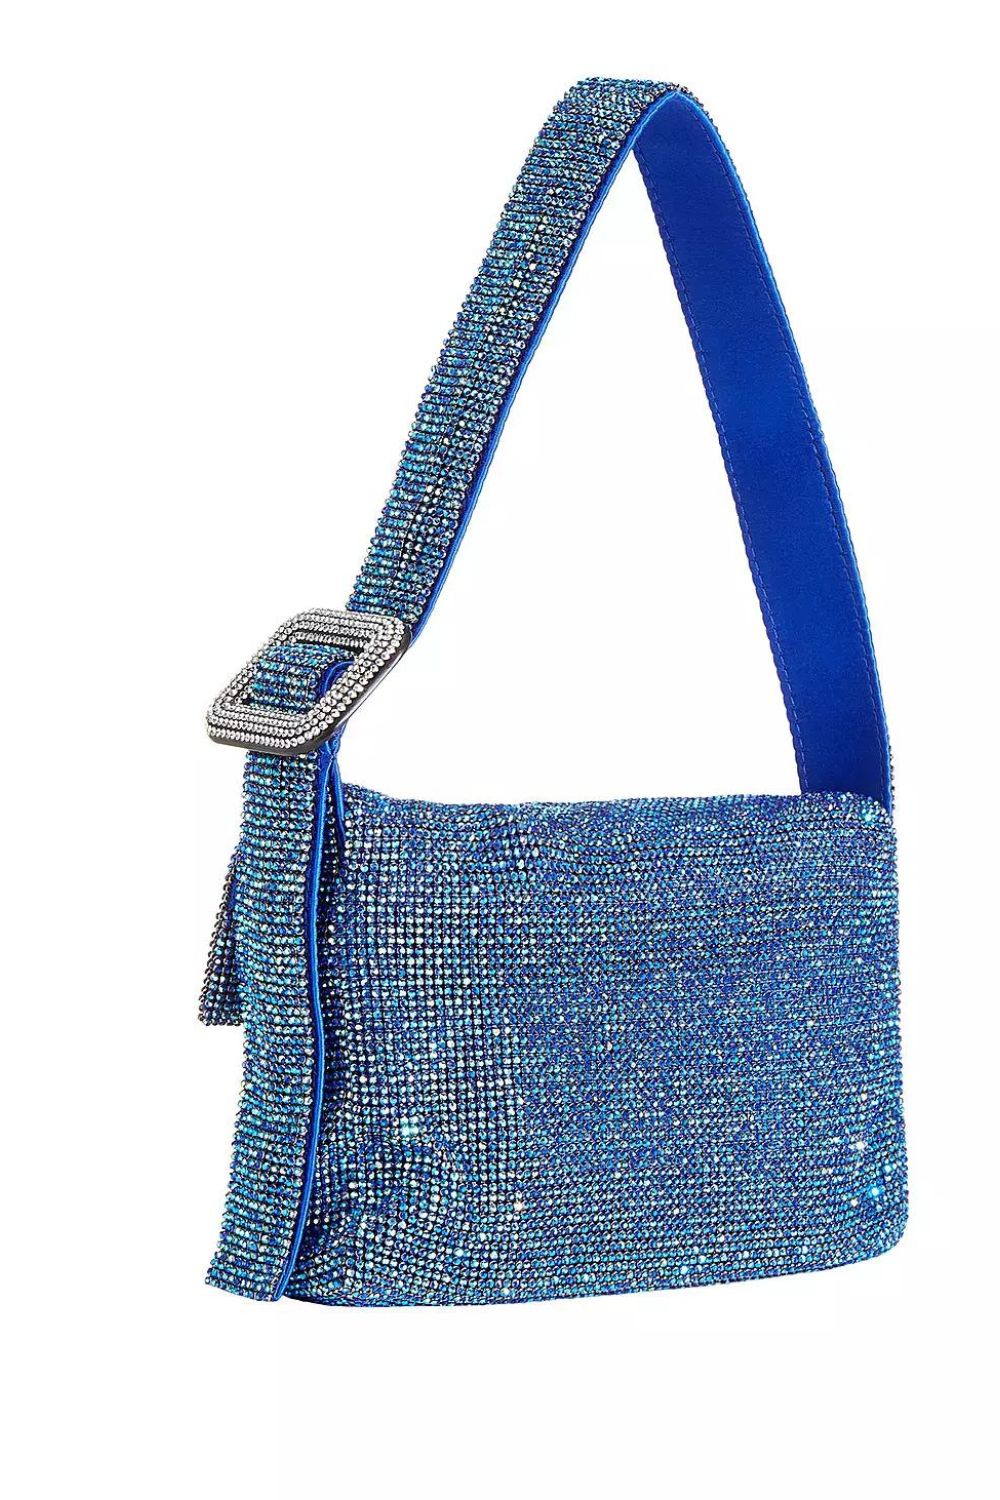 The-Gloss-Magazine-best-sparkling-handbags-4